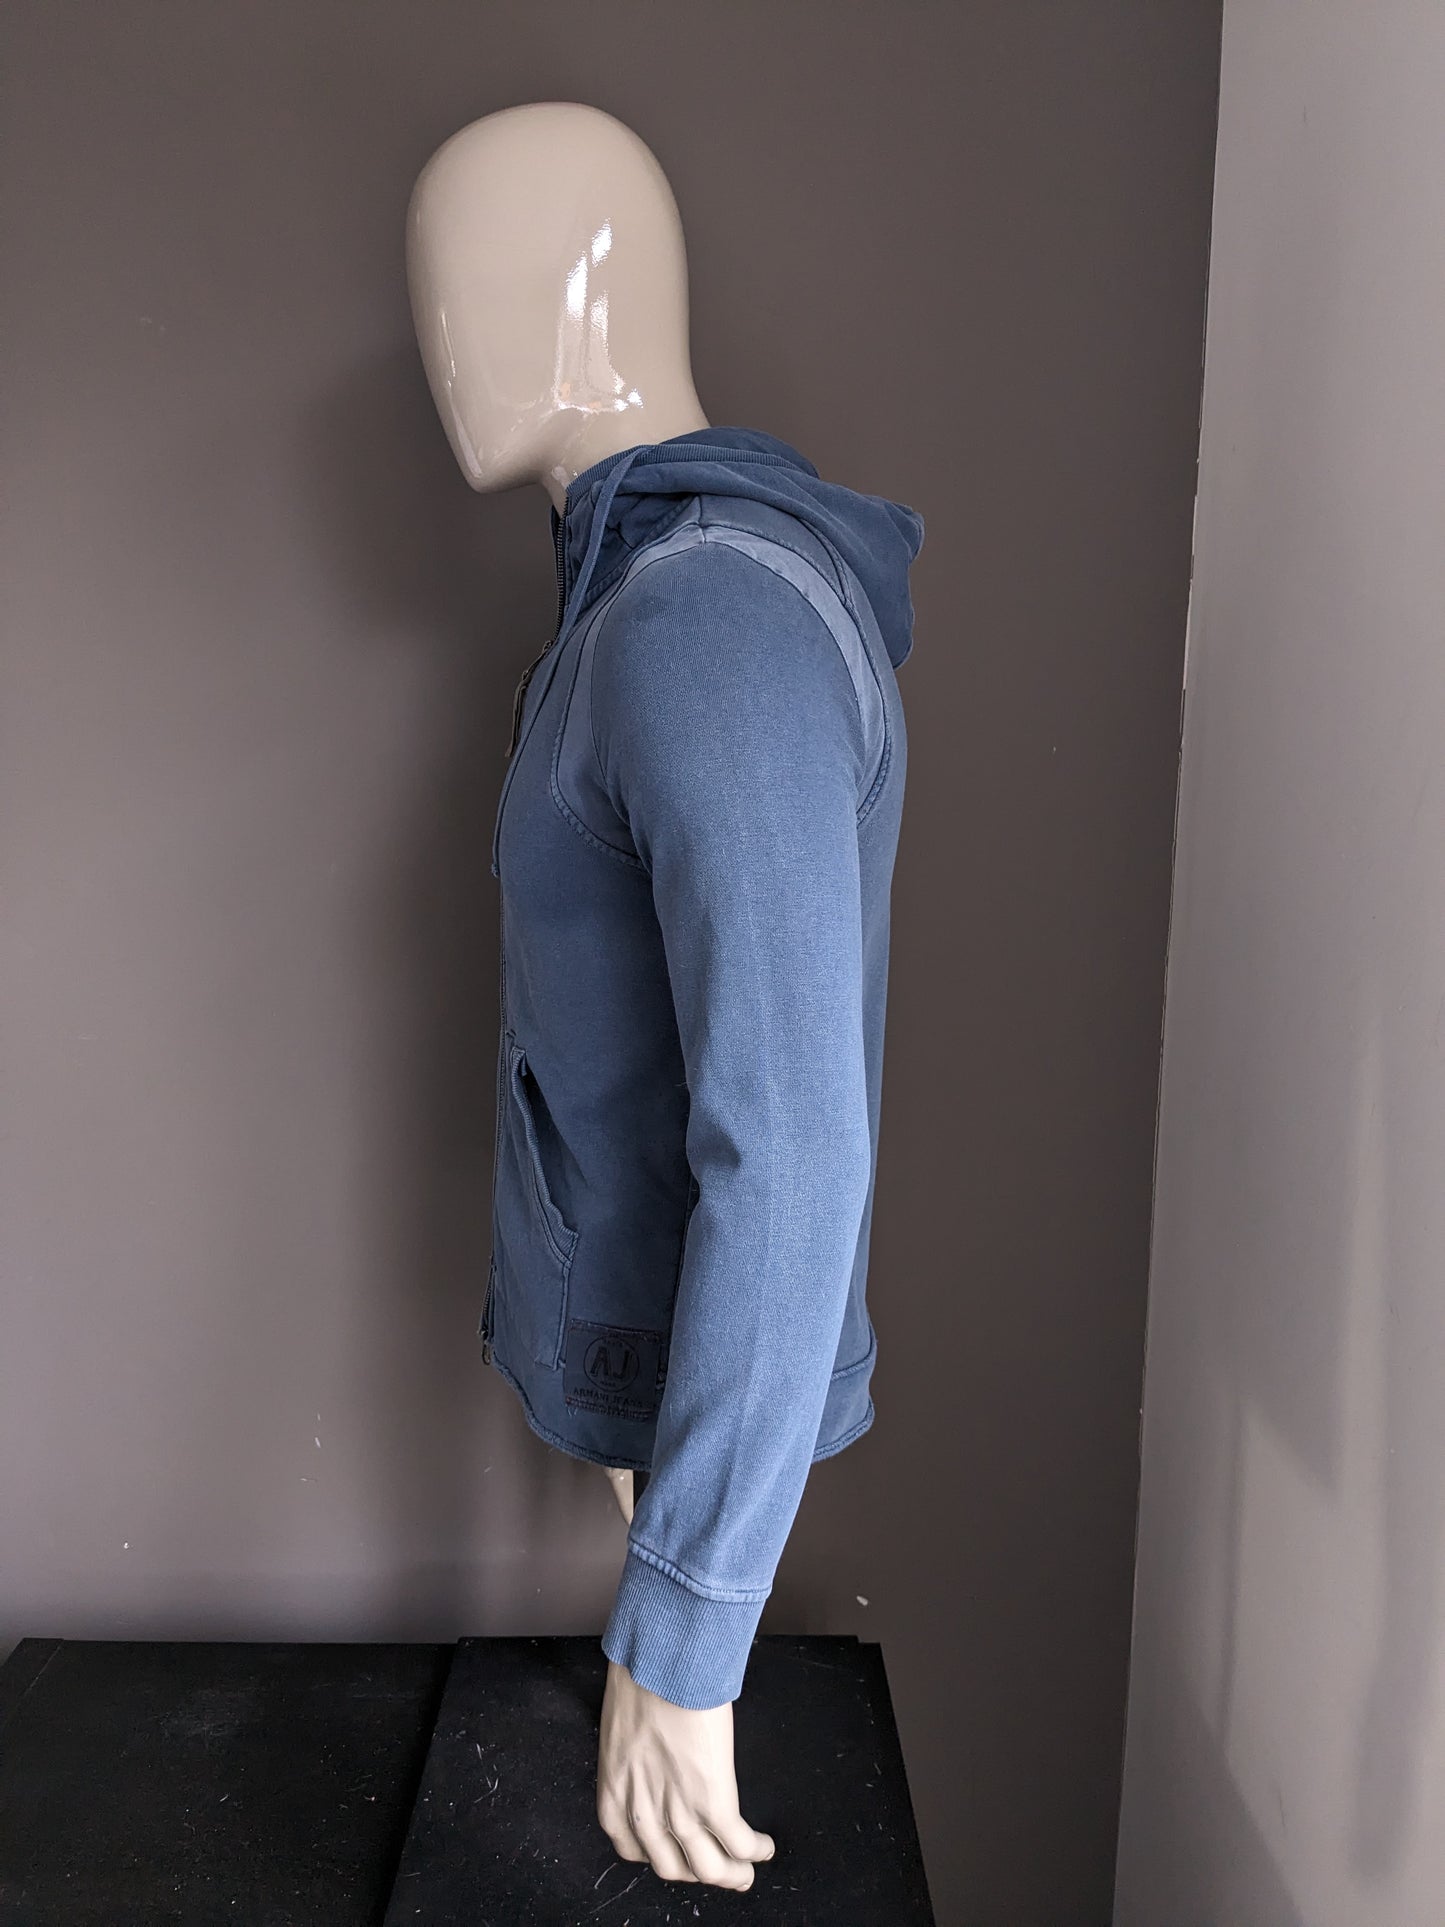 Armani Jeans Vest met Capuchon. Blauw. Maat M / S.